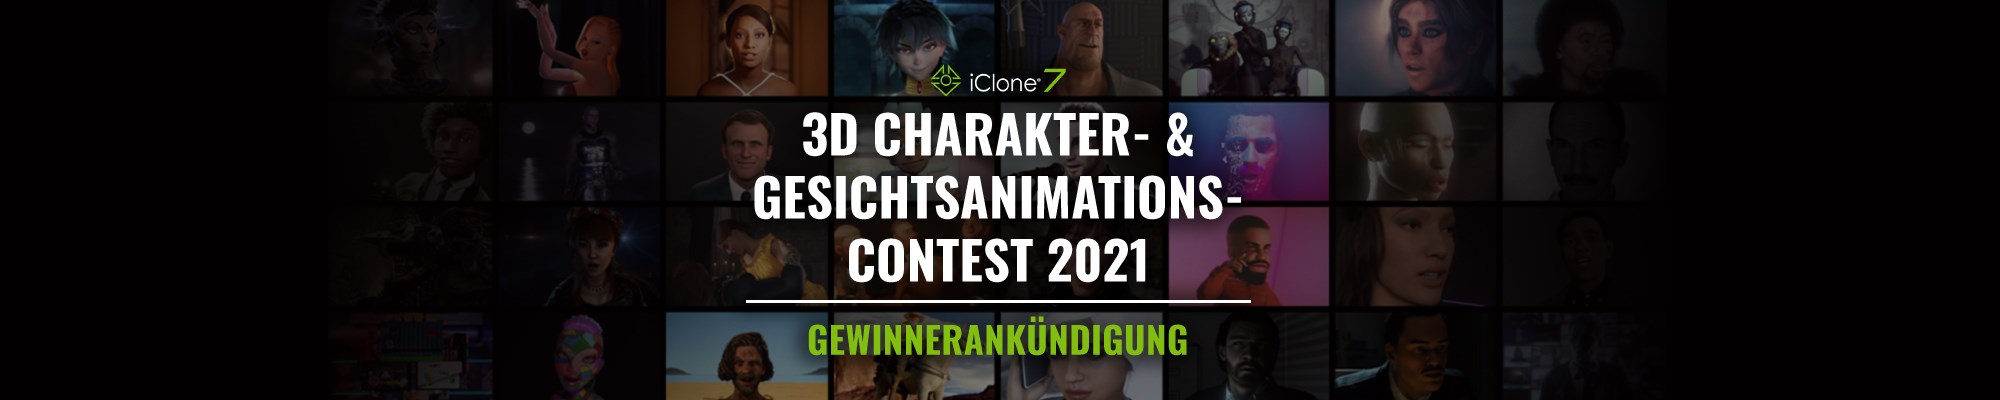 3D Charakter- & Gesichtsanimation-Contest 2021